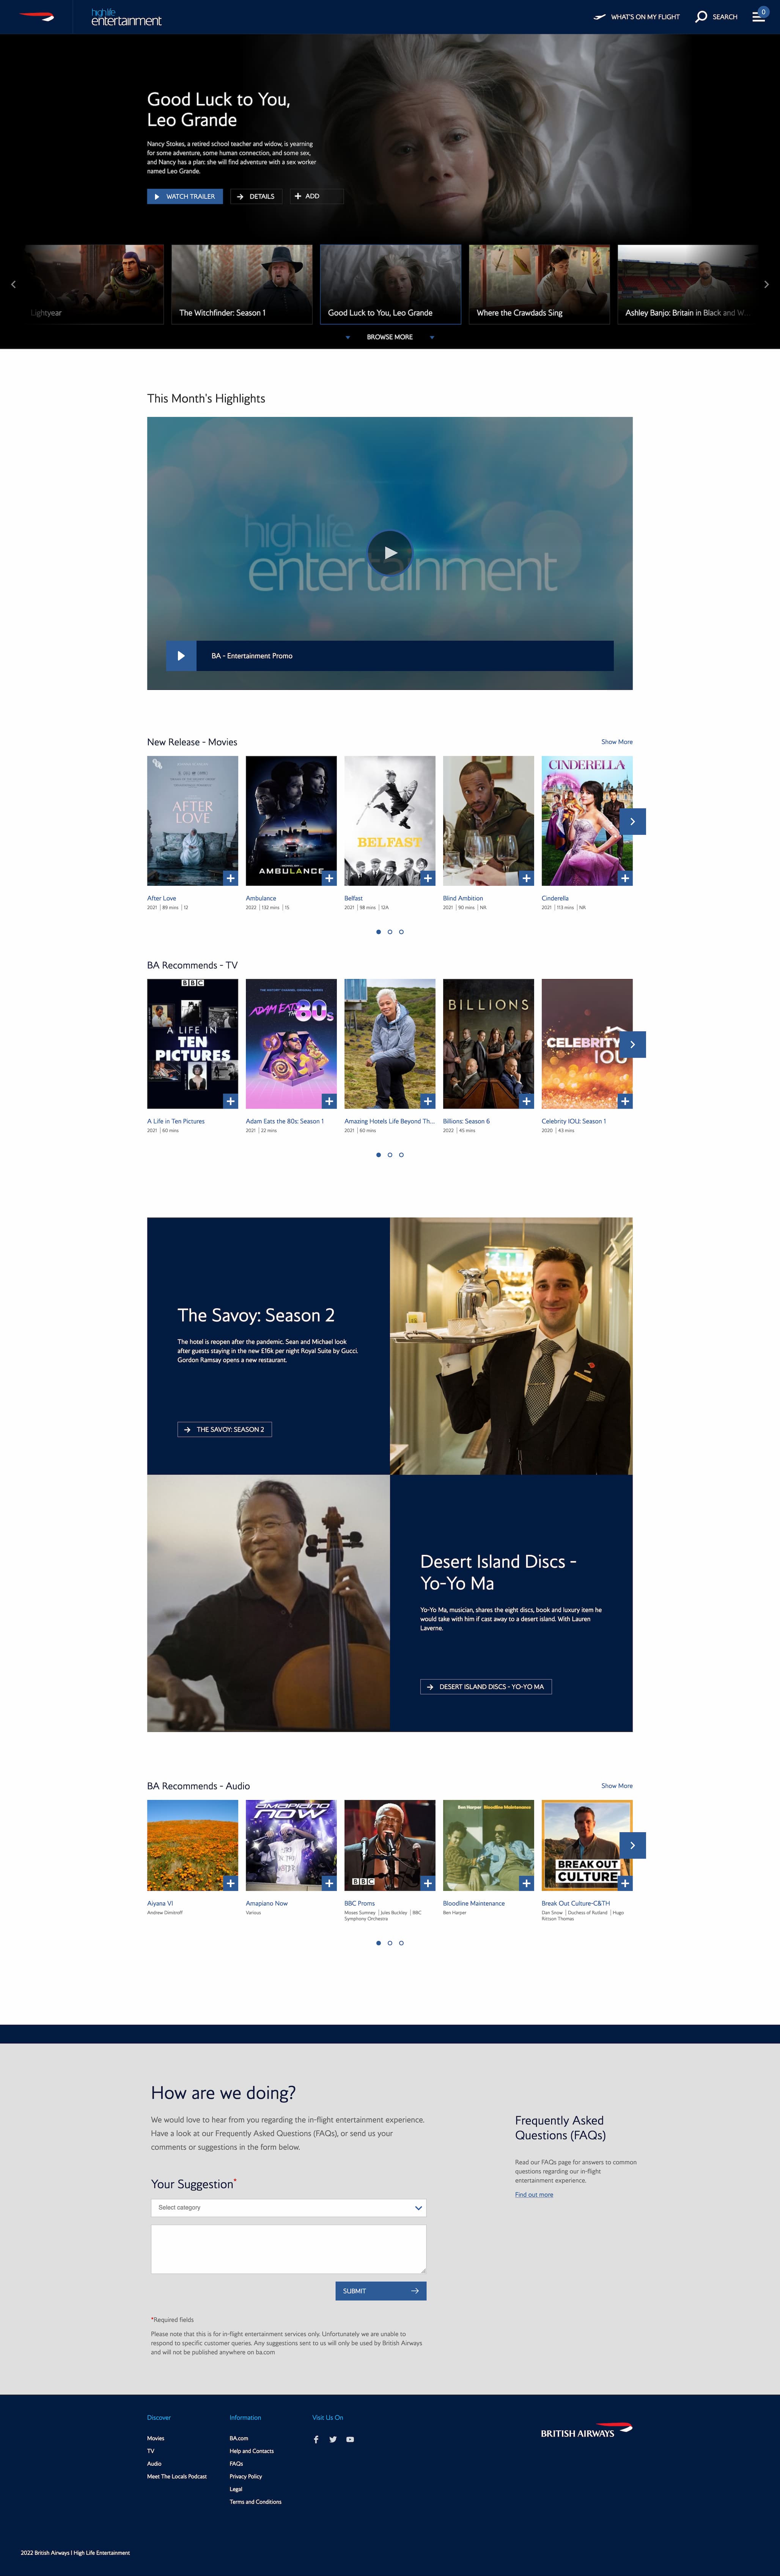 BA In Flight Entertainment homepage